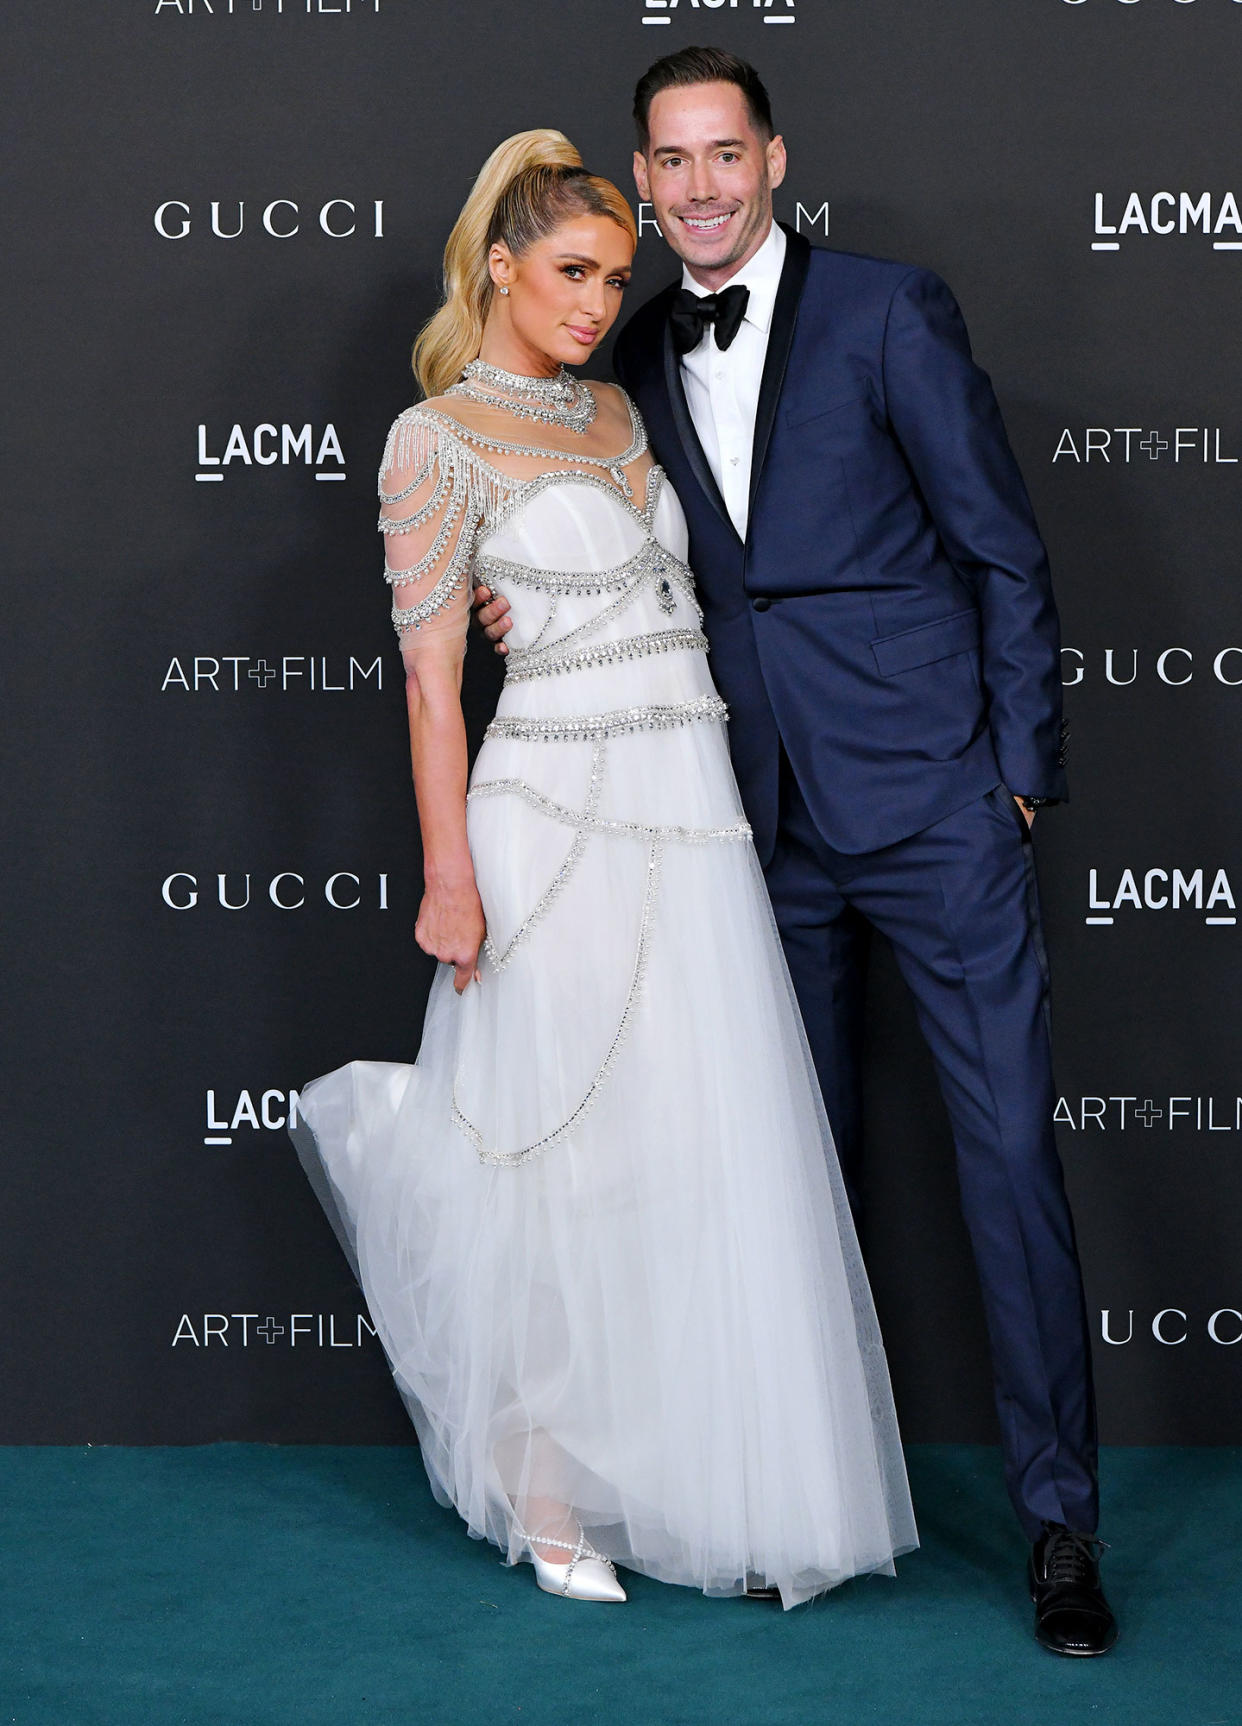 Paris Hilton and Husband Carter Reum Welcome 2nd Baby Via Surrogate